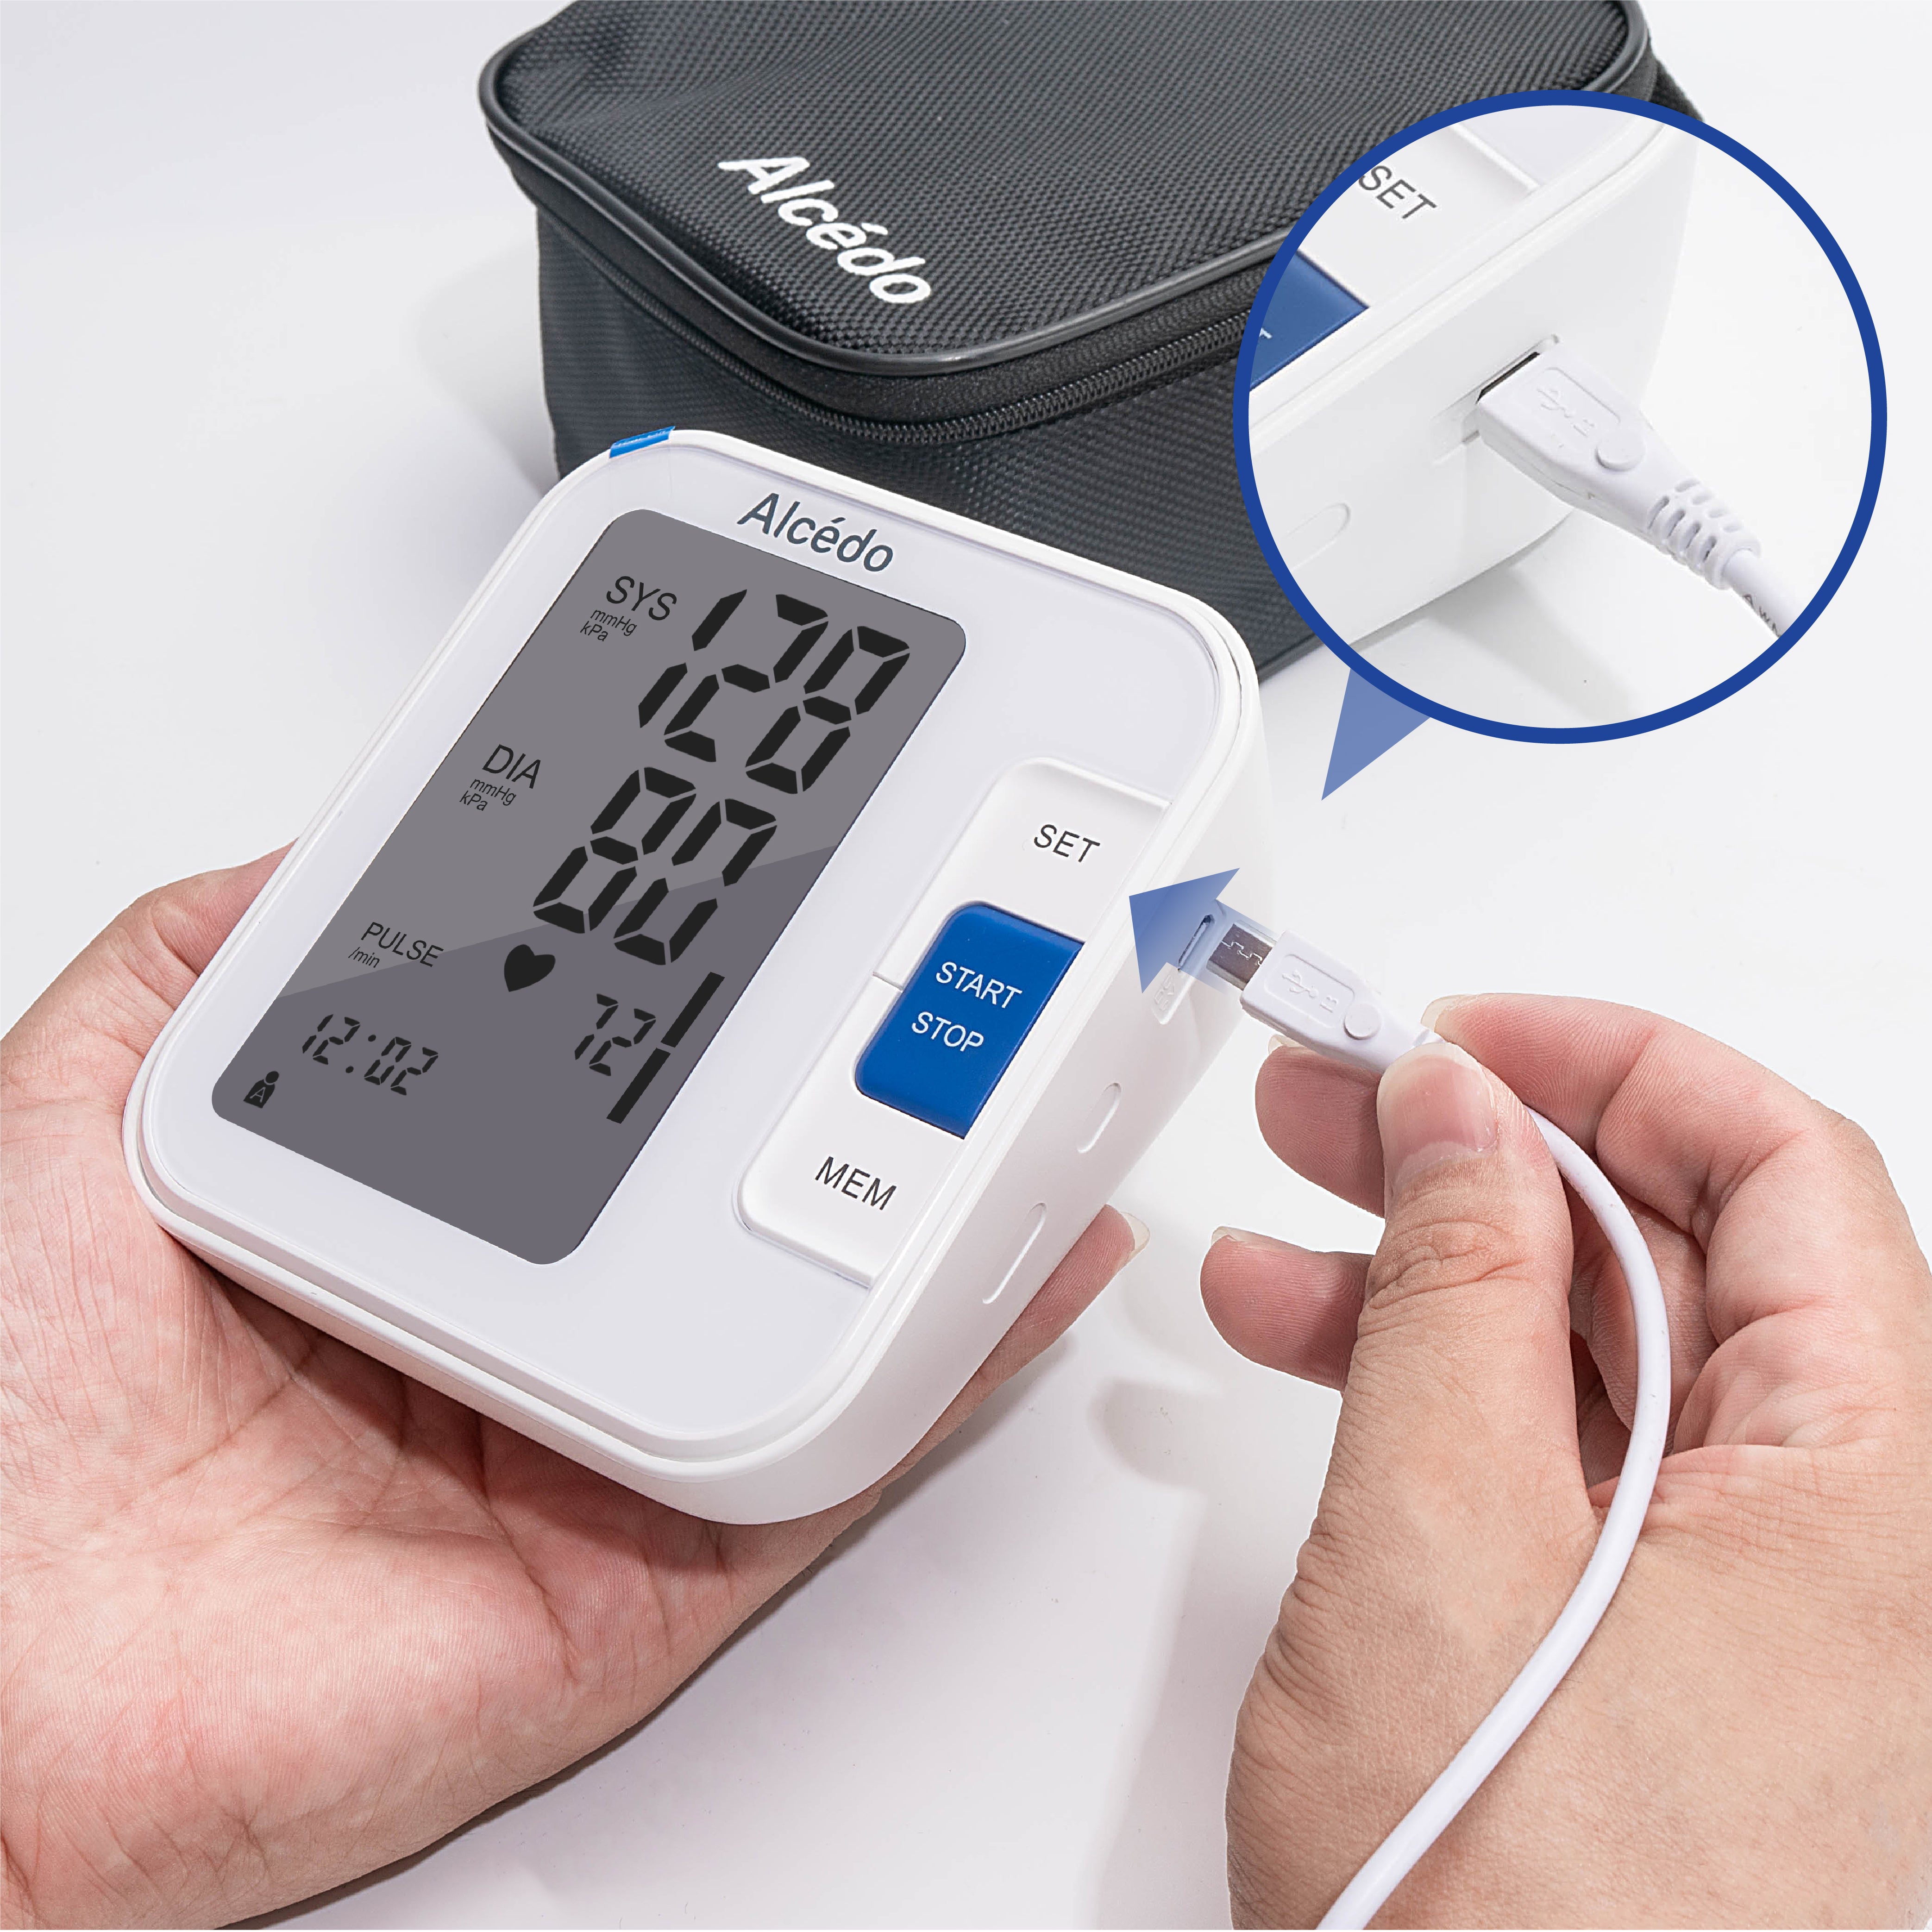 Alcedo Automatic Upper Arm Blood Pressure Monitor